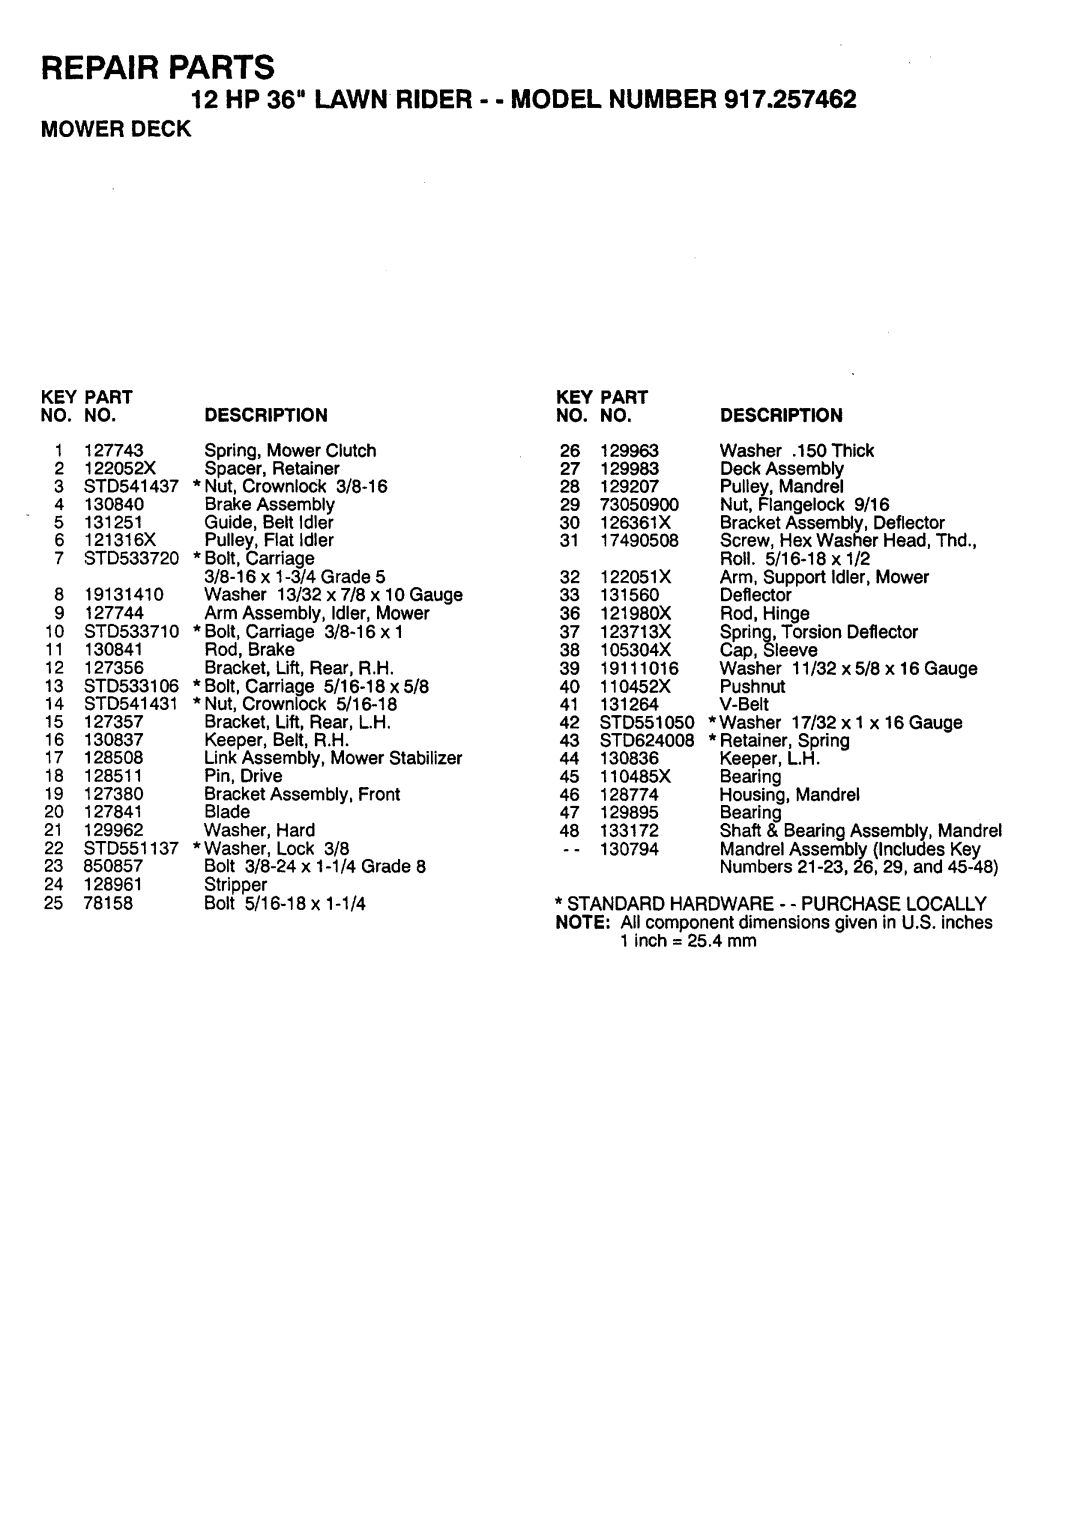 Sears 917.257462 manual Mower Deck, Repair Parts, 12 HP 36 LAWN RIDER - - MODEL NUMBER, Washer 